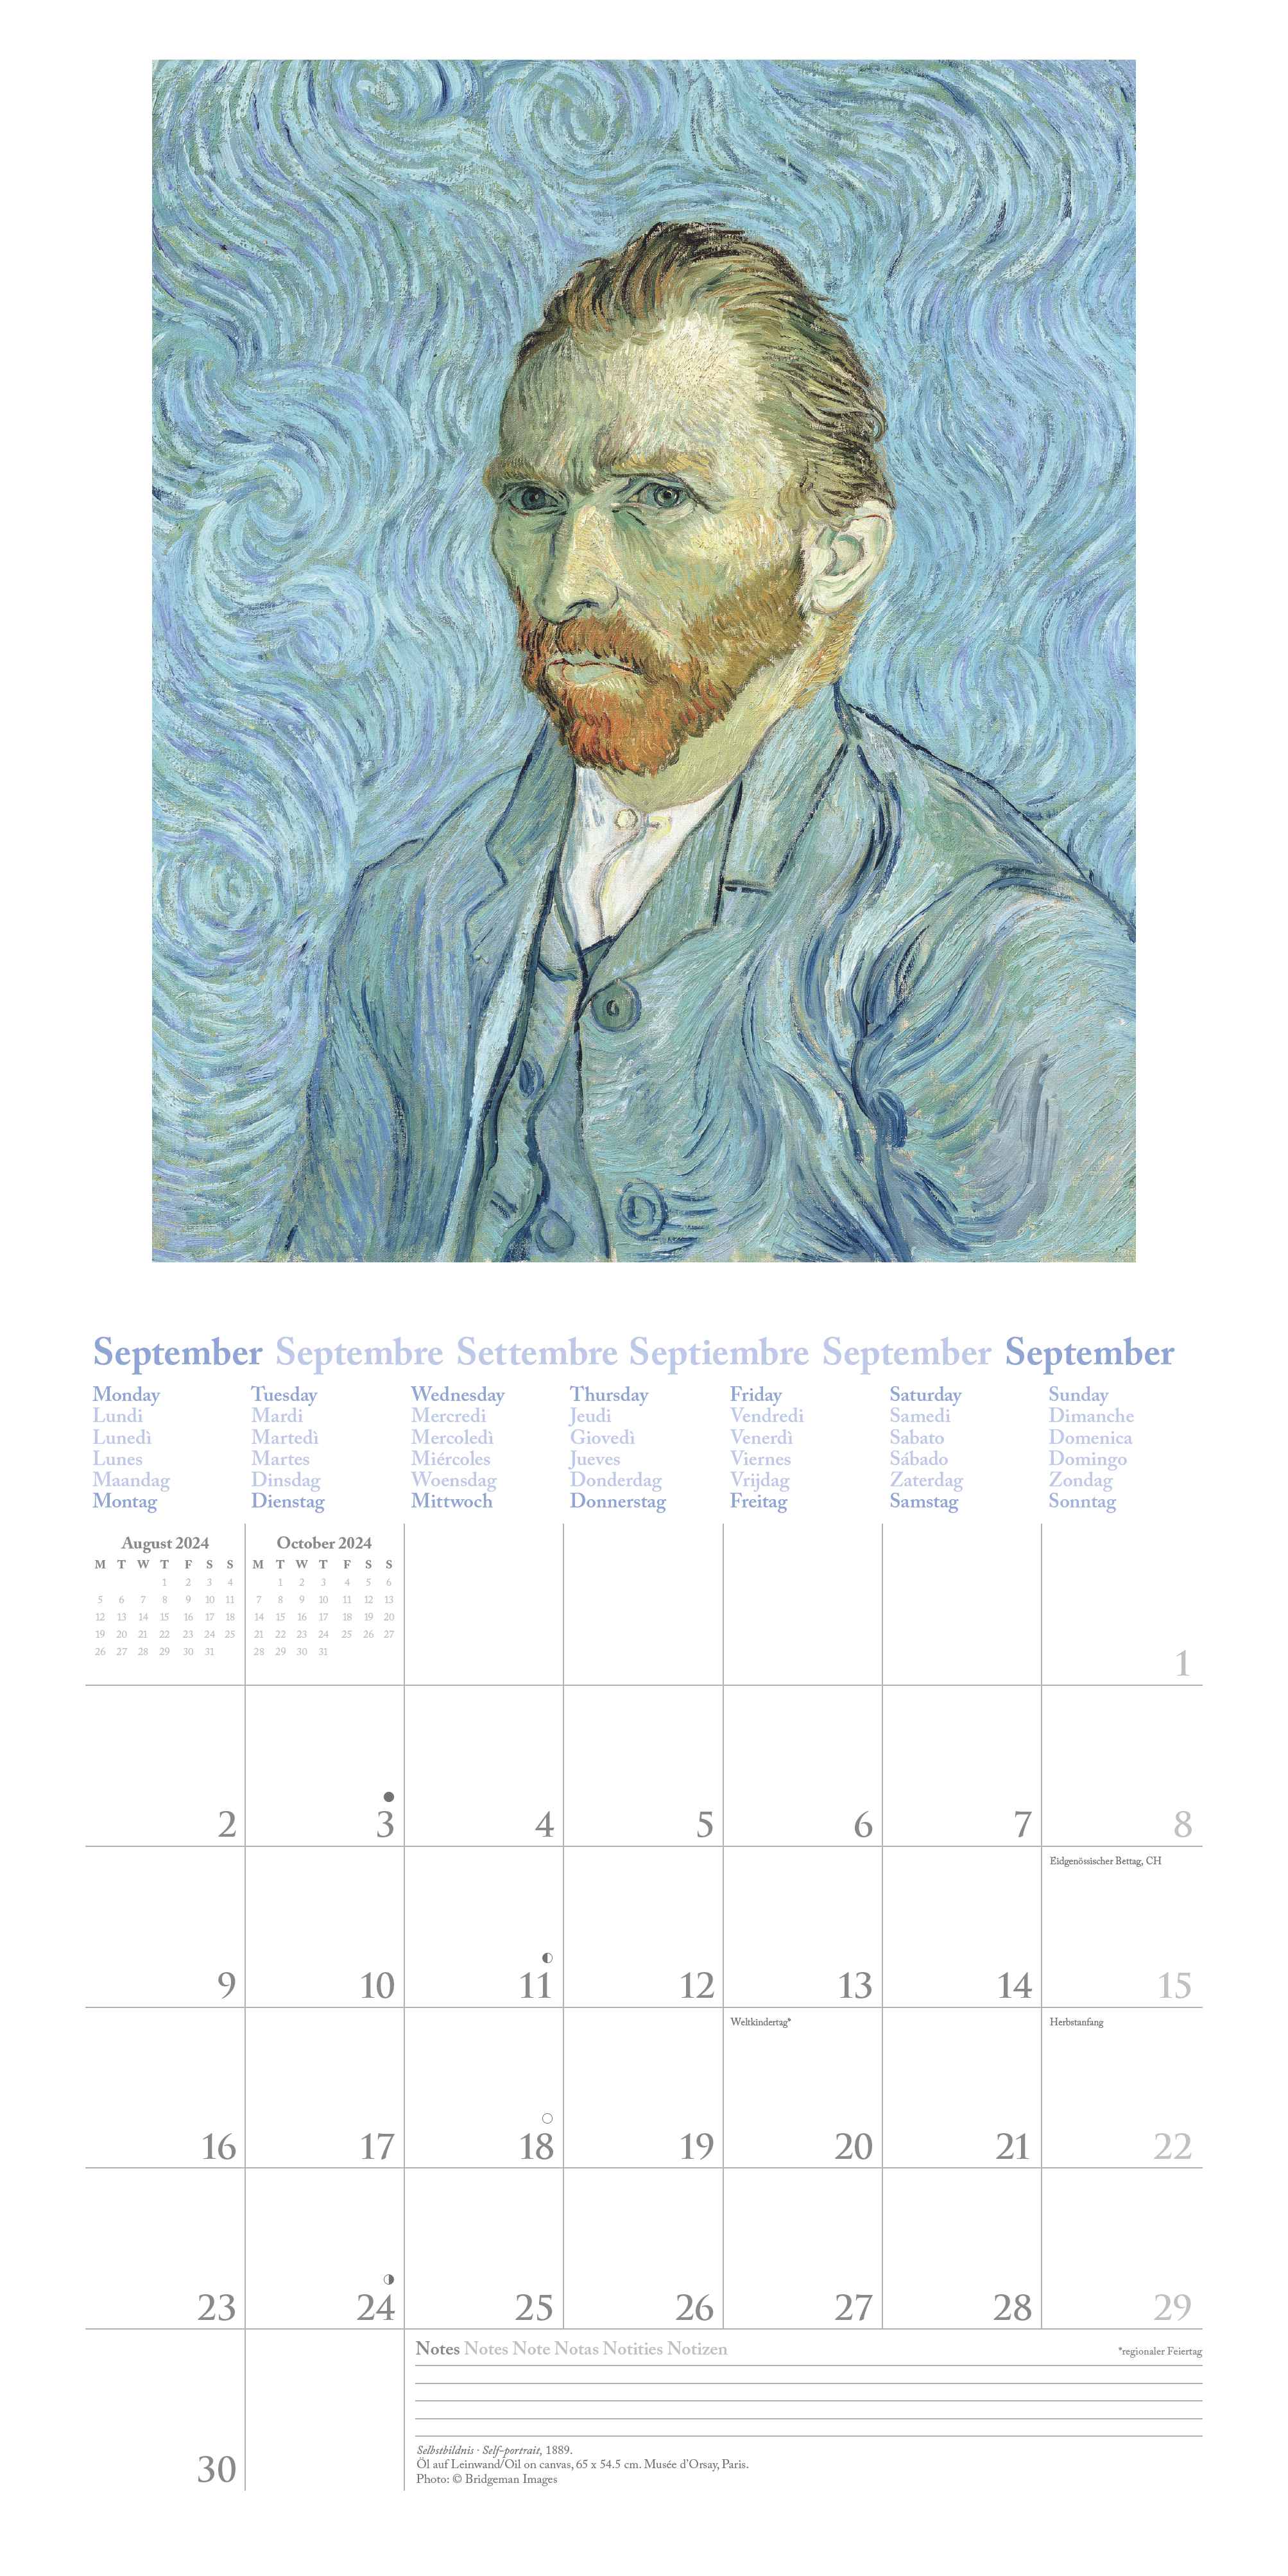 2024 Vincent Van Gogh (Neumann) - Square Wall Calendar